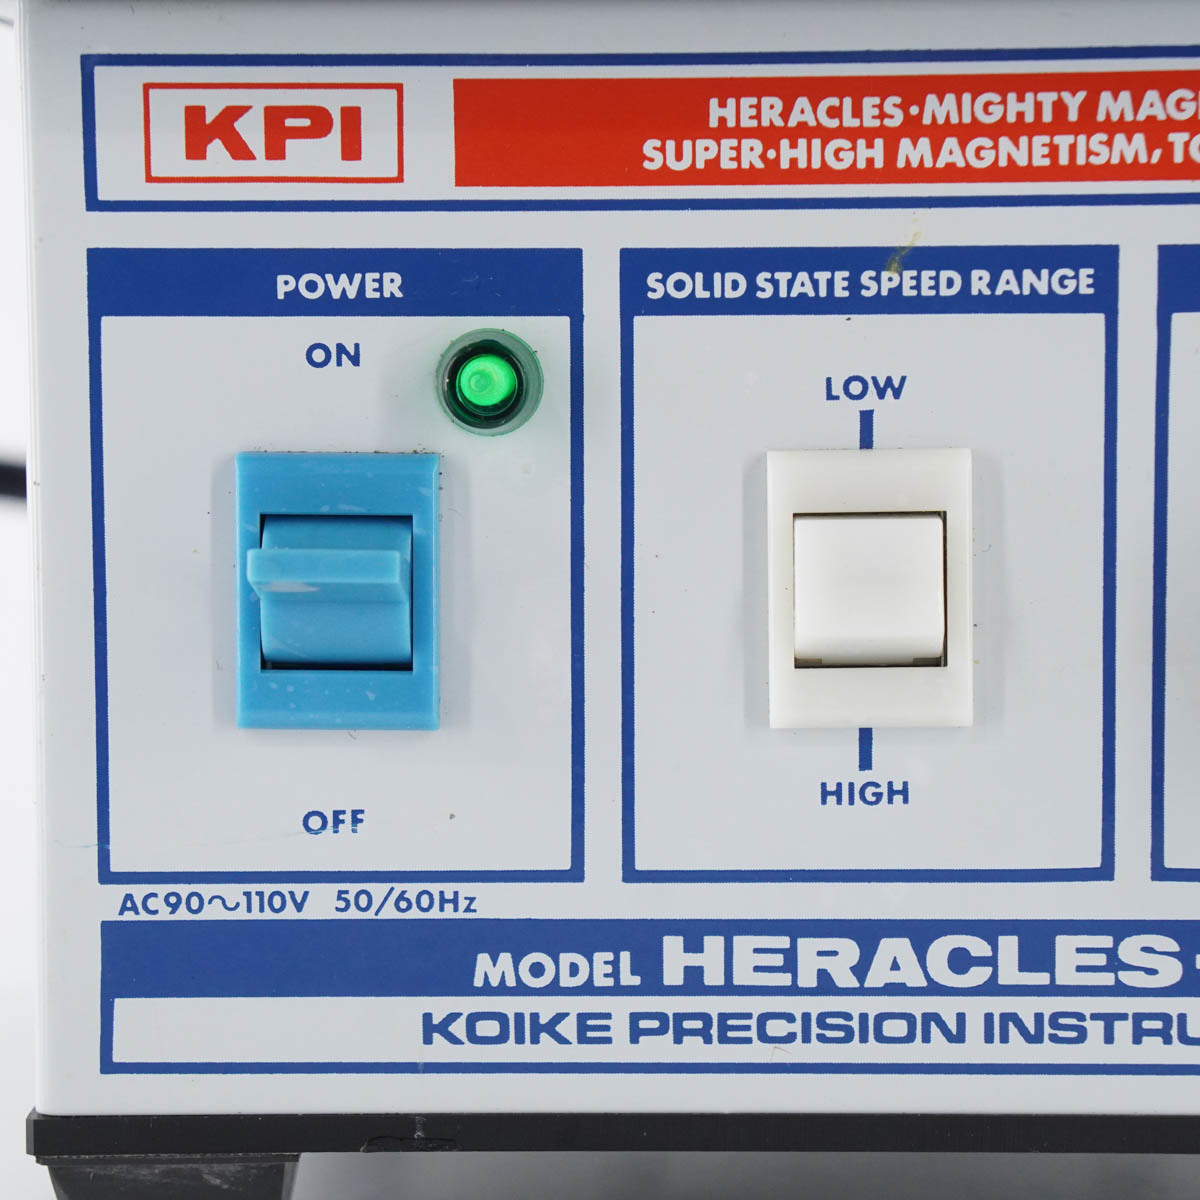 [DW] 8日保証 HERACLES-16G KPI HE-160A KOIKE PRECISION 小池精密機器製作所 MAGNETIC STIRRER スターラー ヘラクレス[05370-0002]_画像5